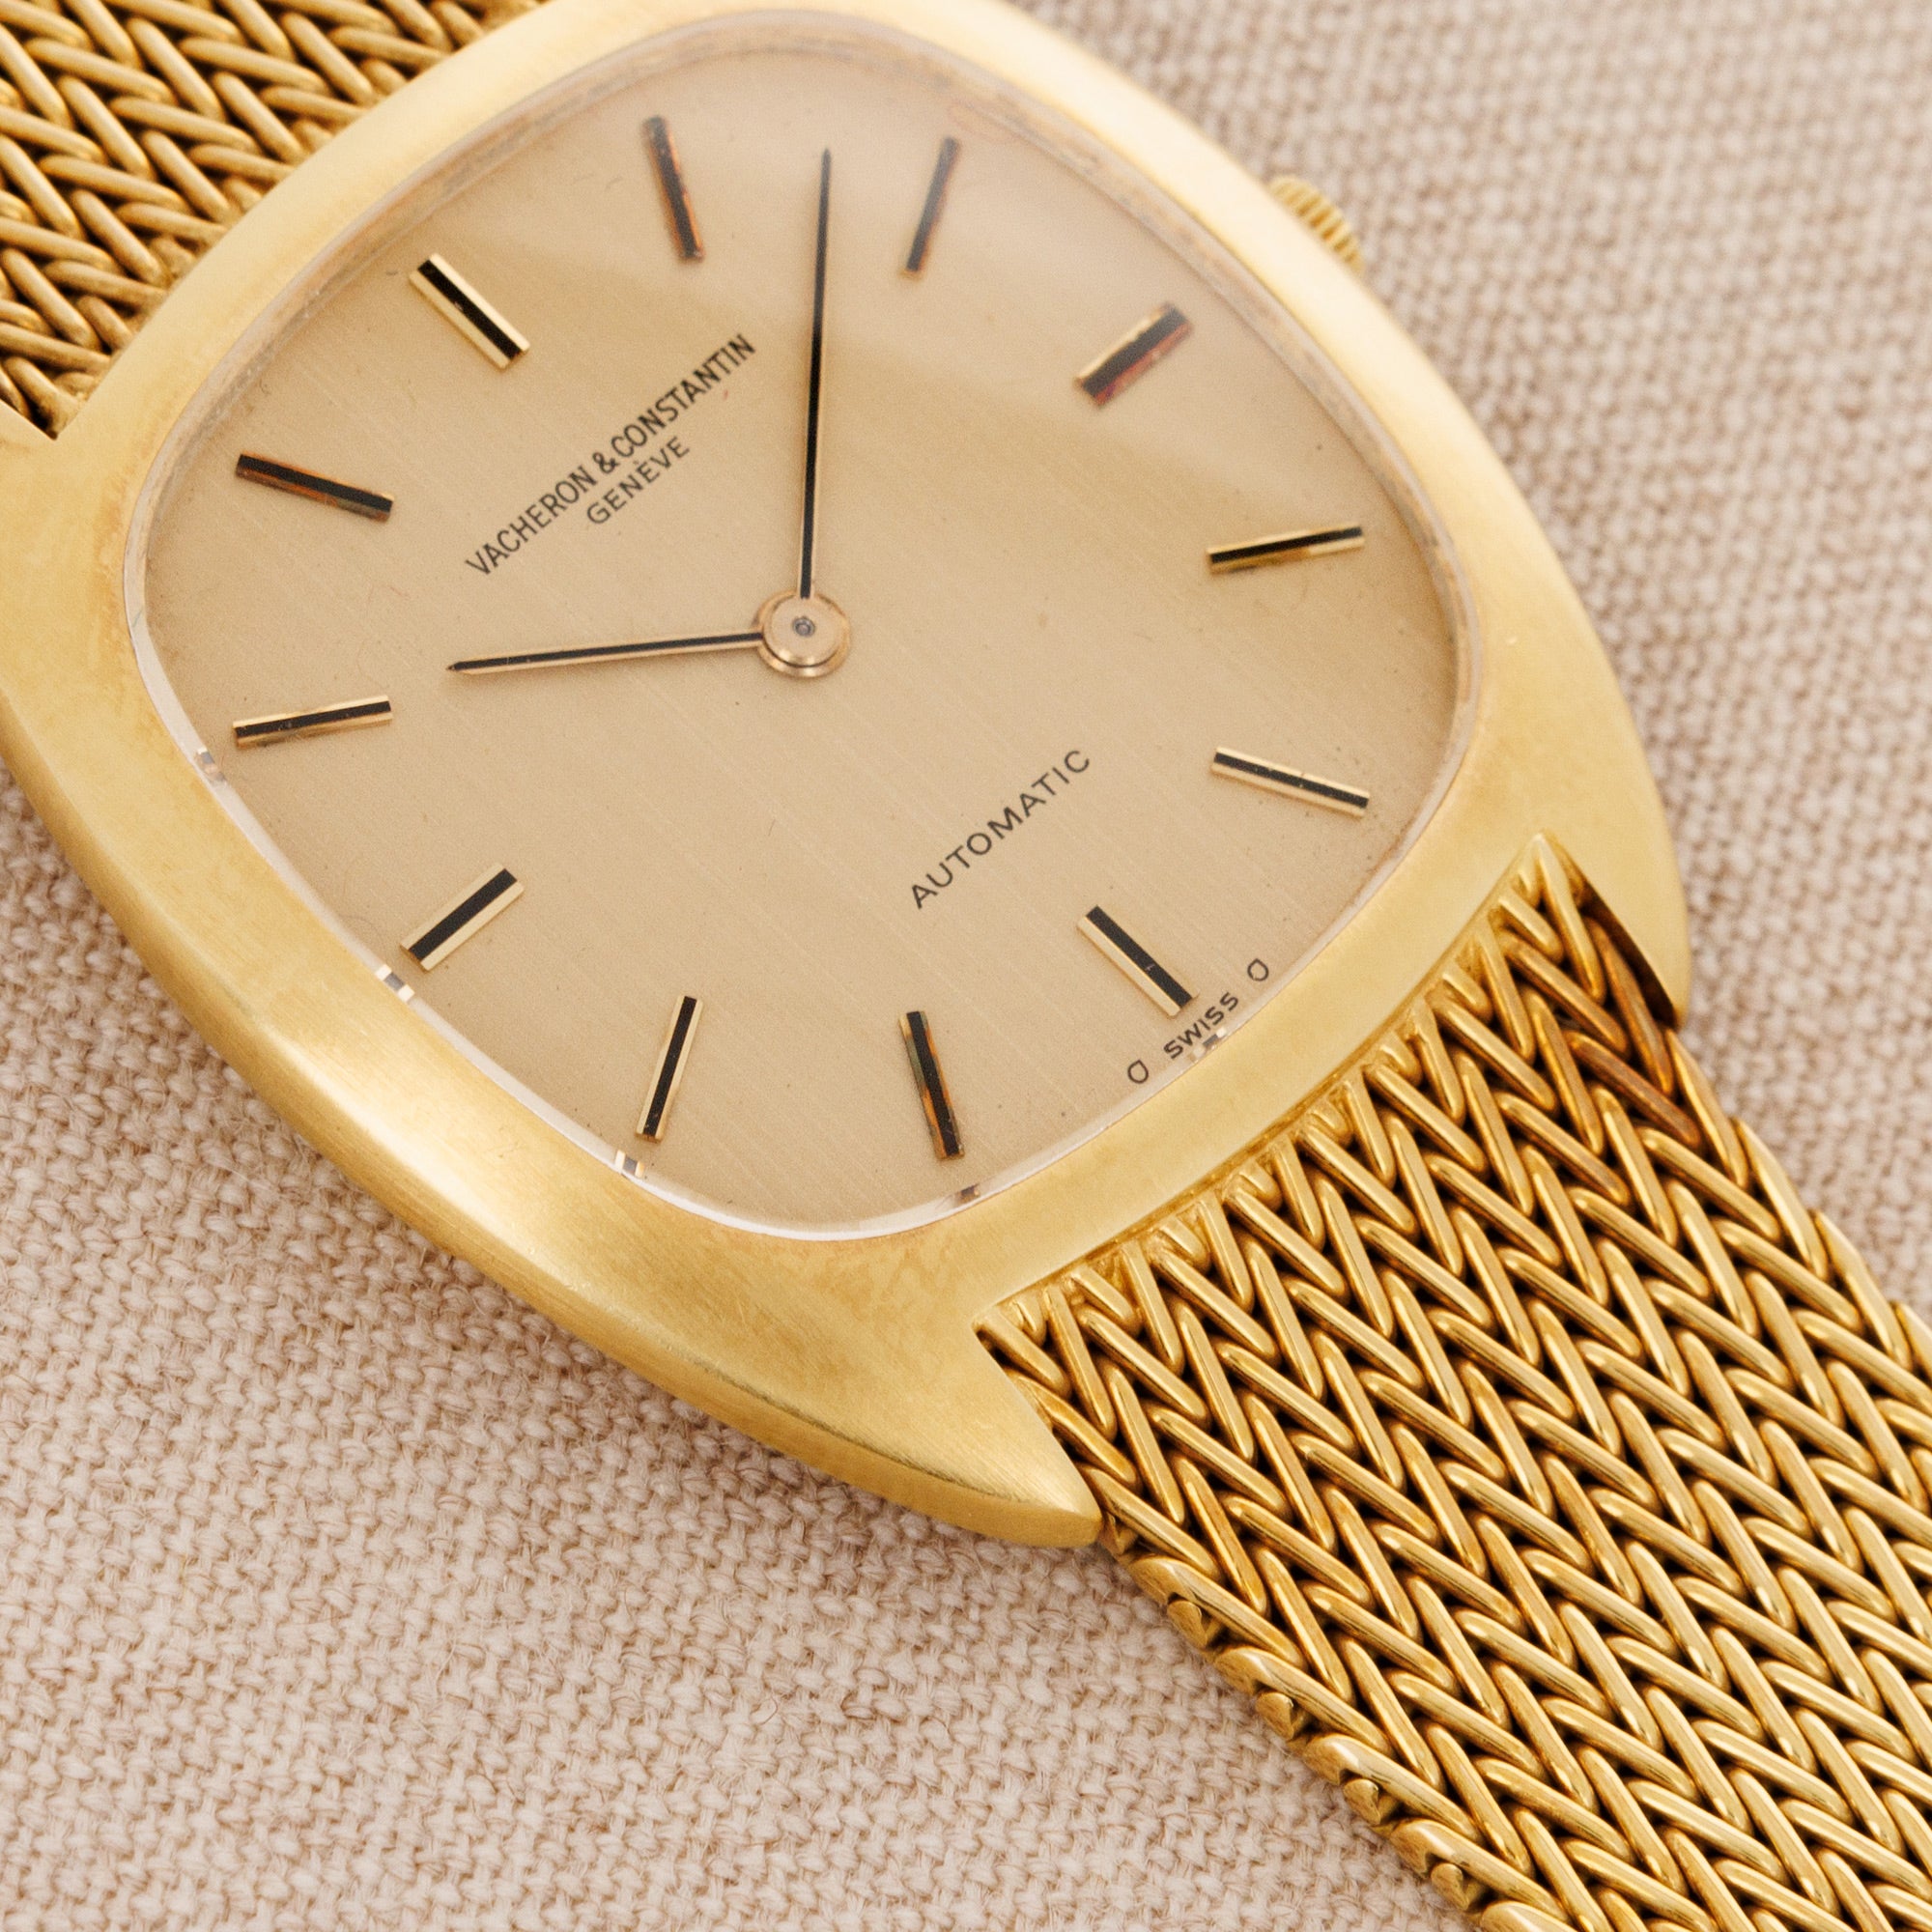 Vacheron Constantin - Vacheron Constantin Yellow Gold Watch Ref. 2020 with Original Paperwork - The Keystone Watches